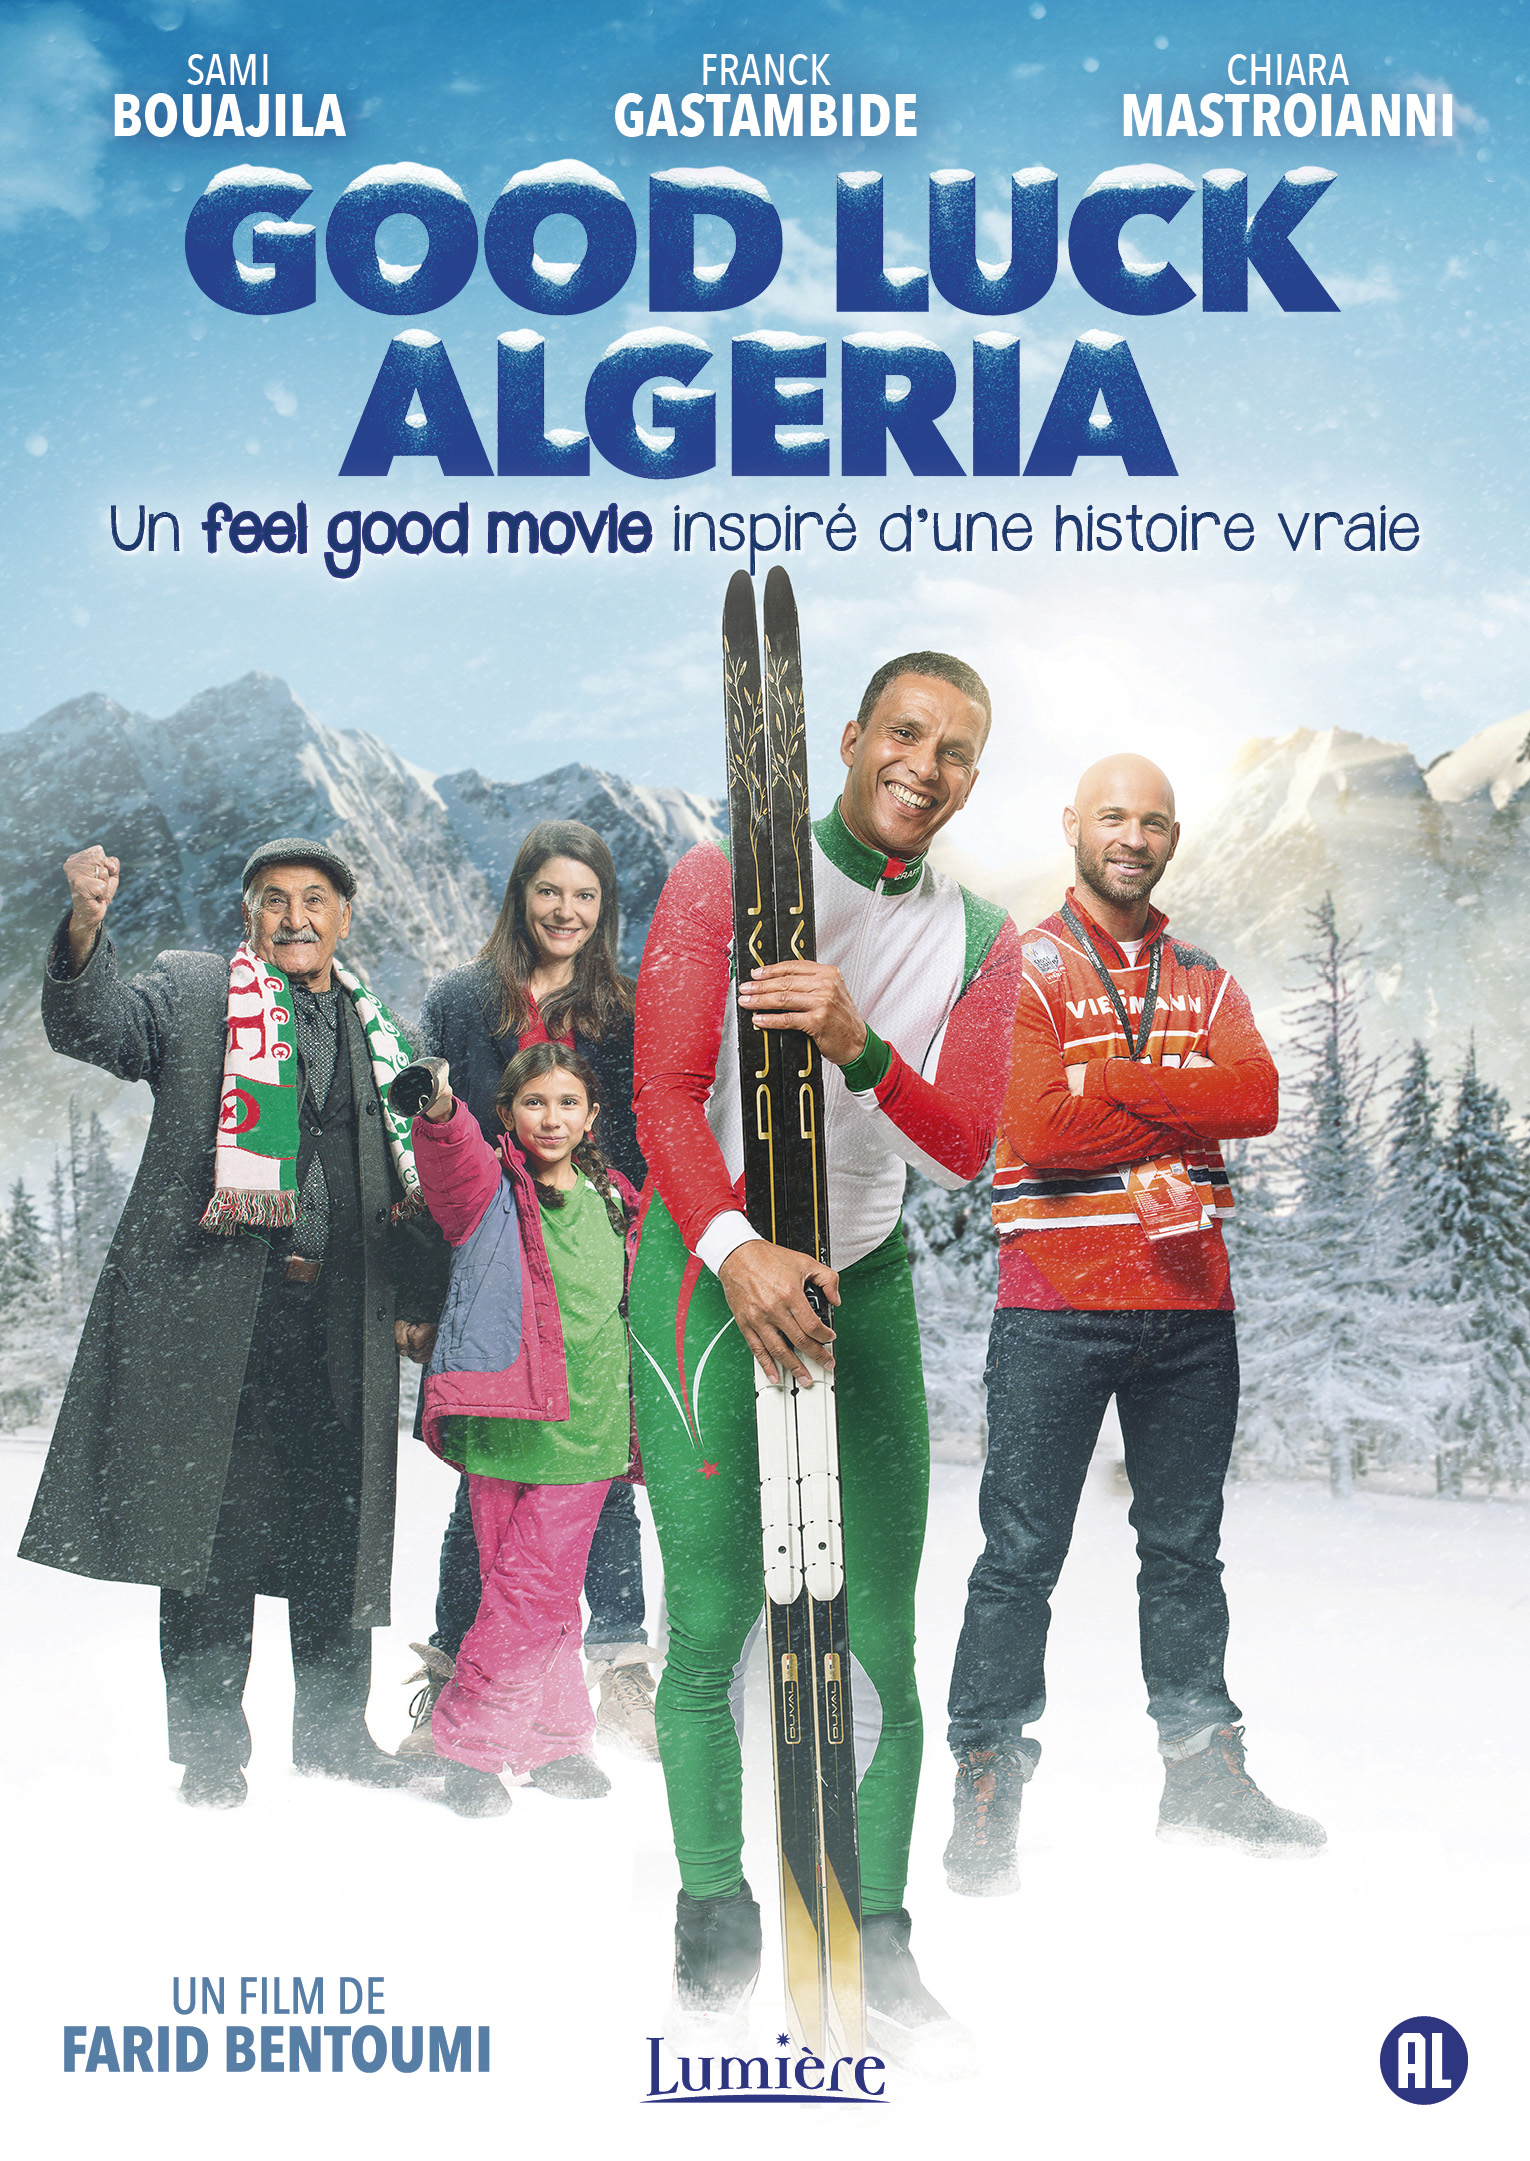 GOOD LUCK ALGERIA